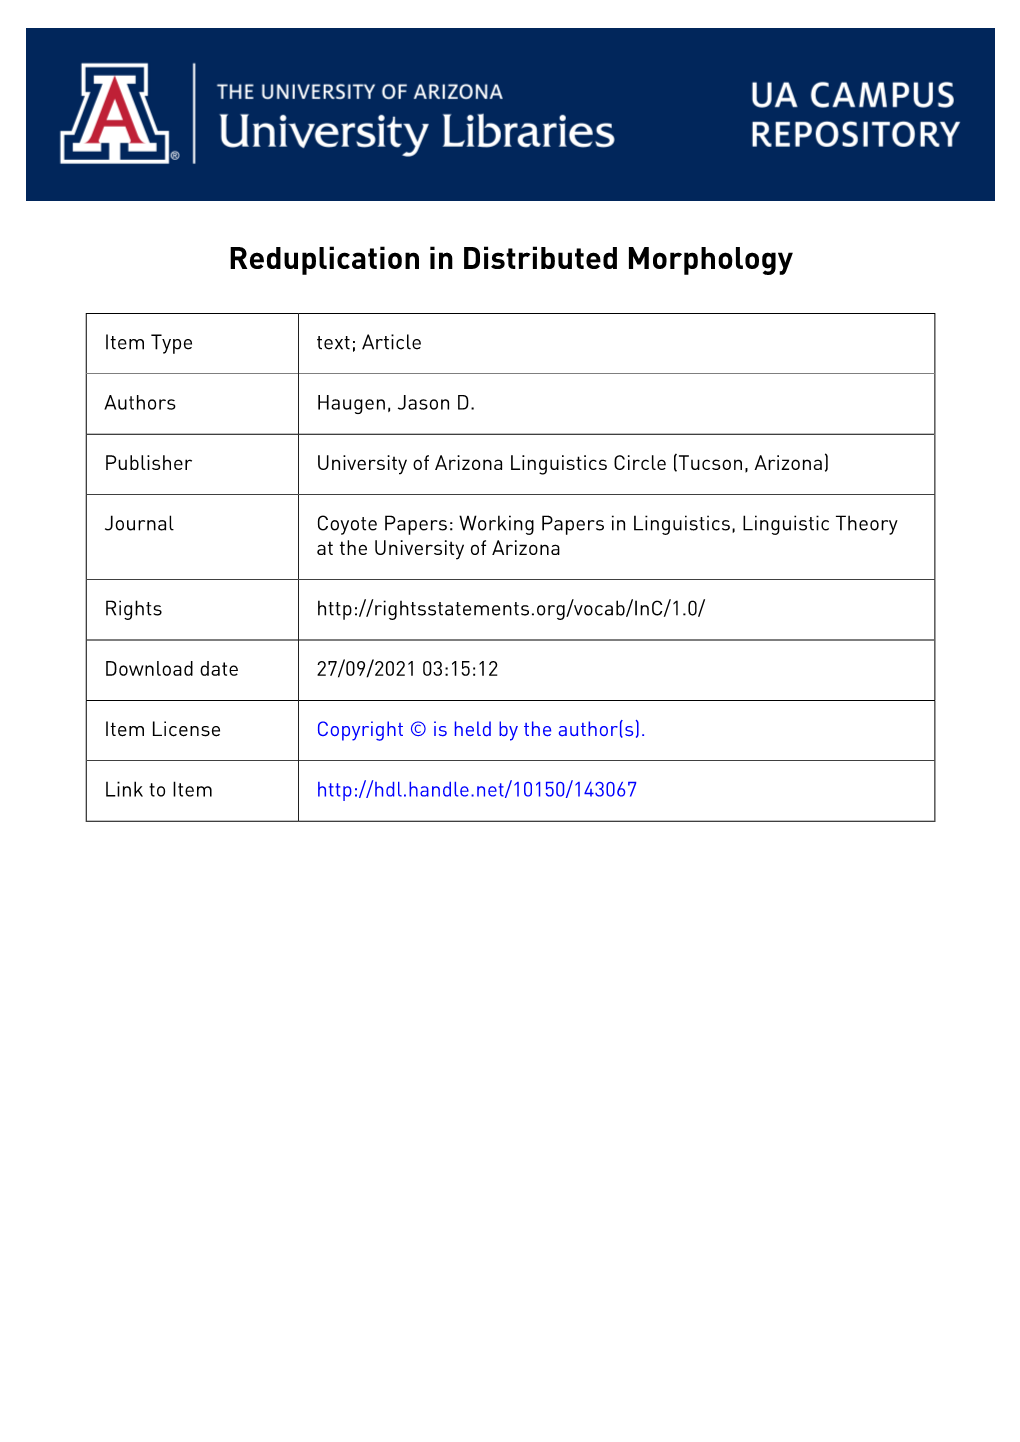 Reduplication in Distributed Morphology